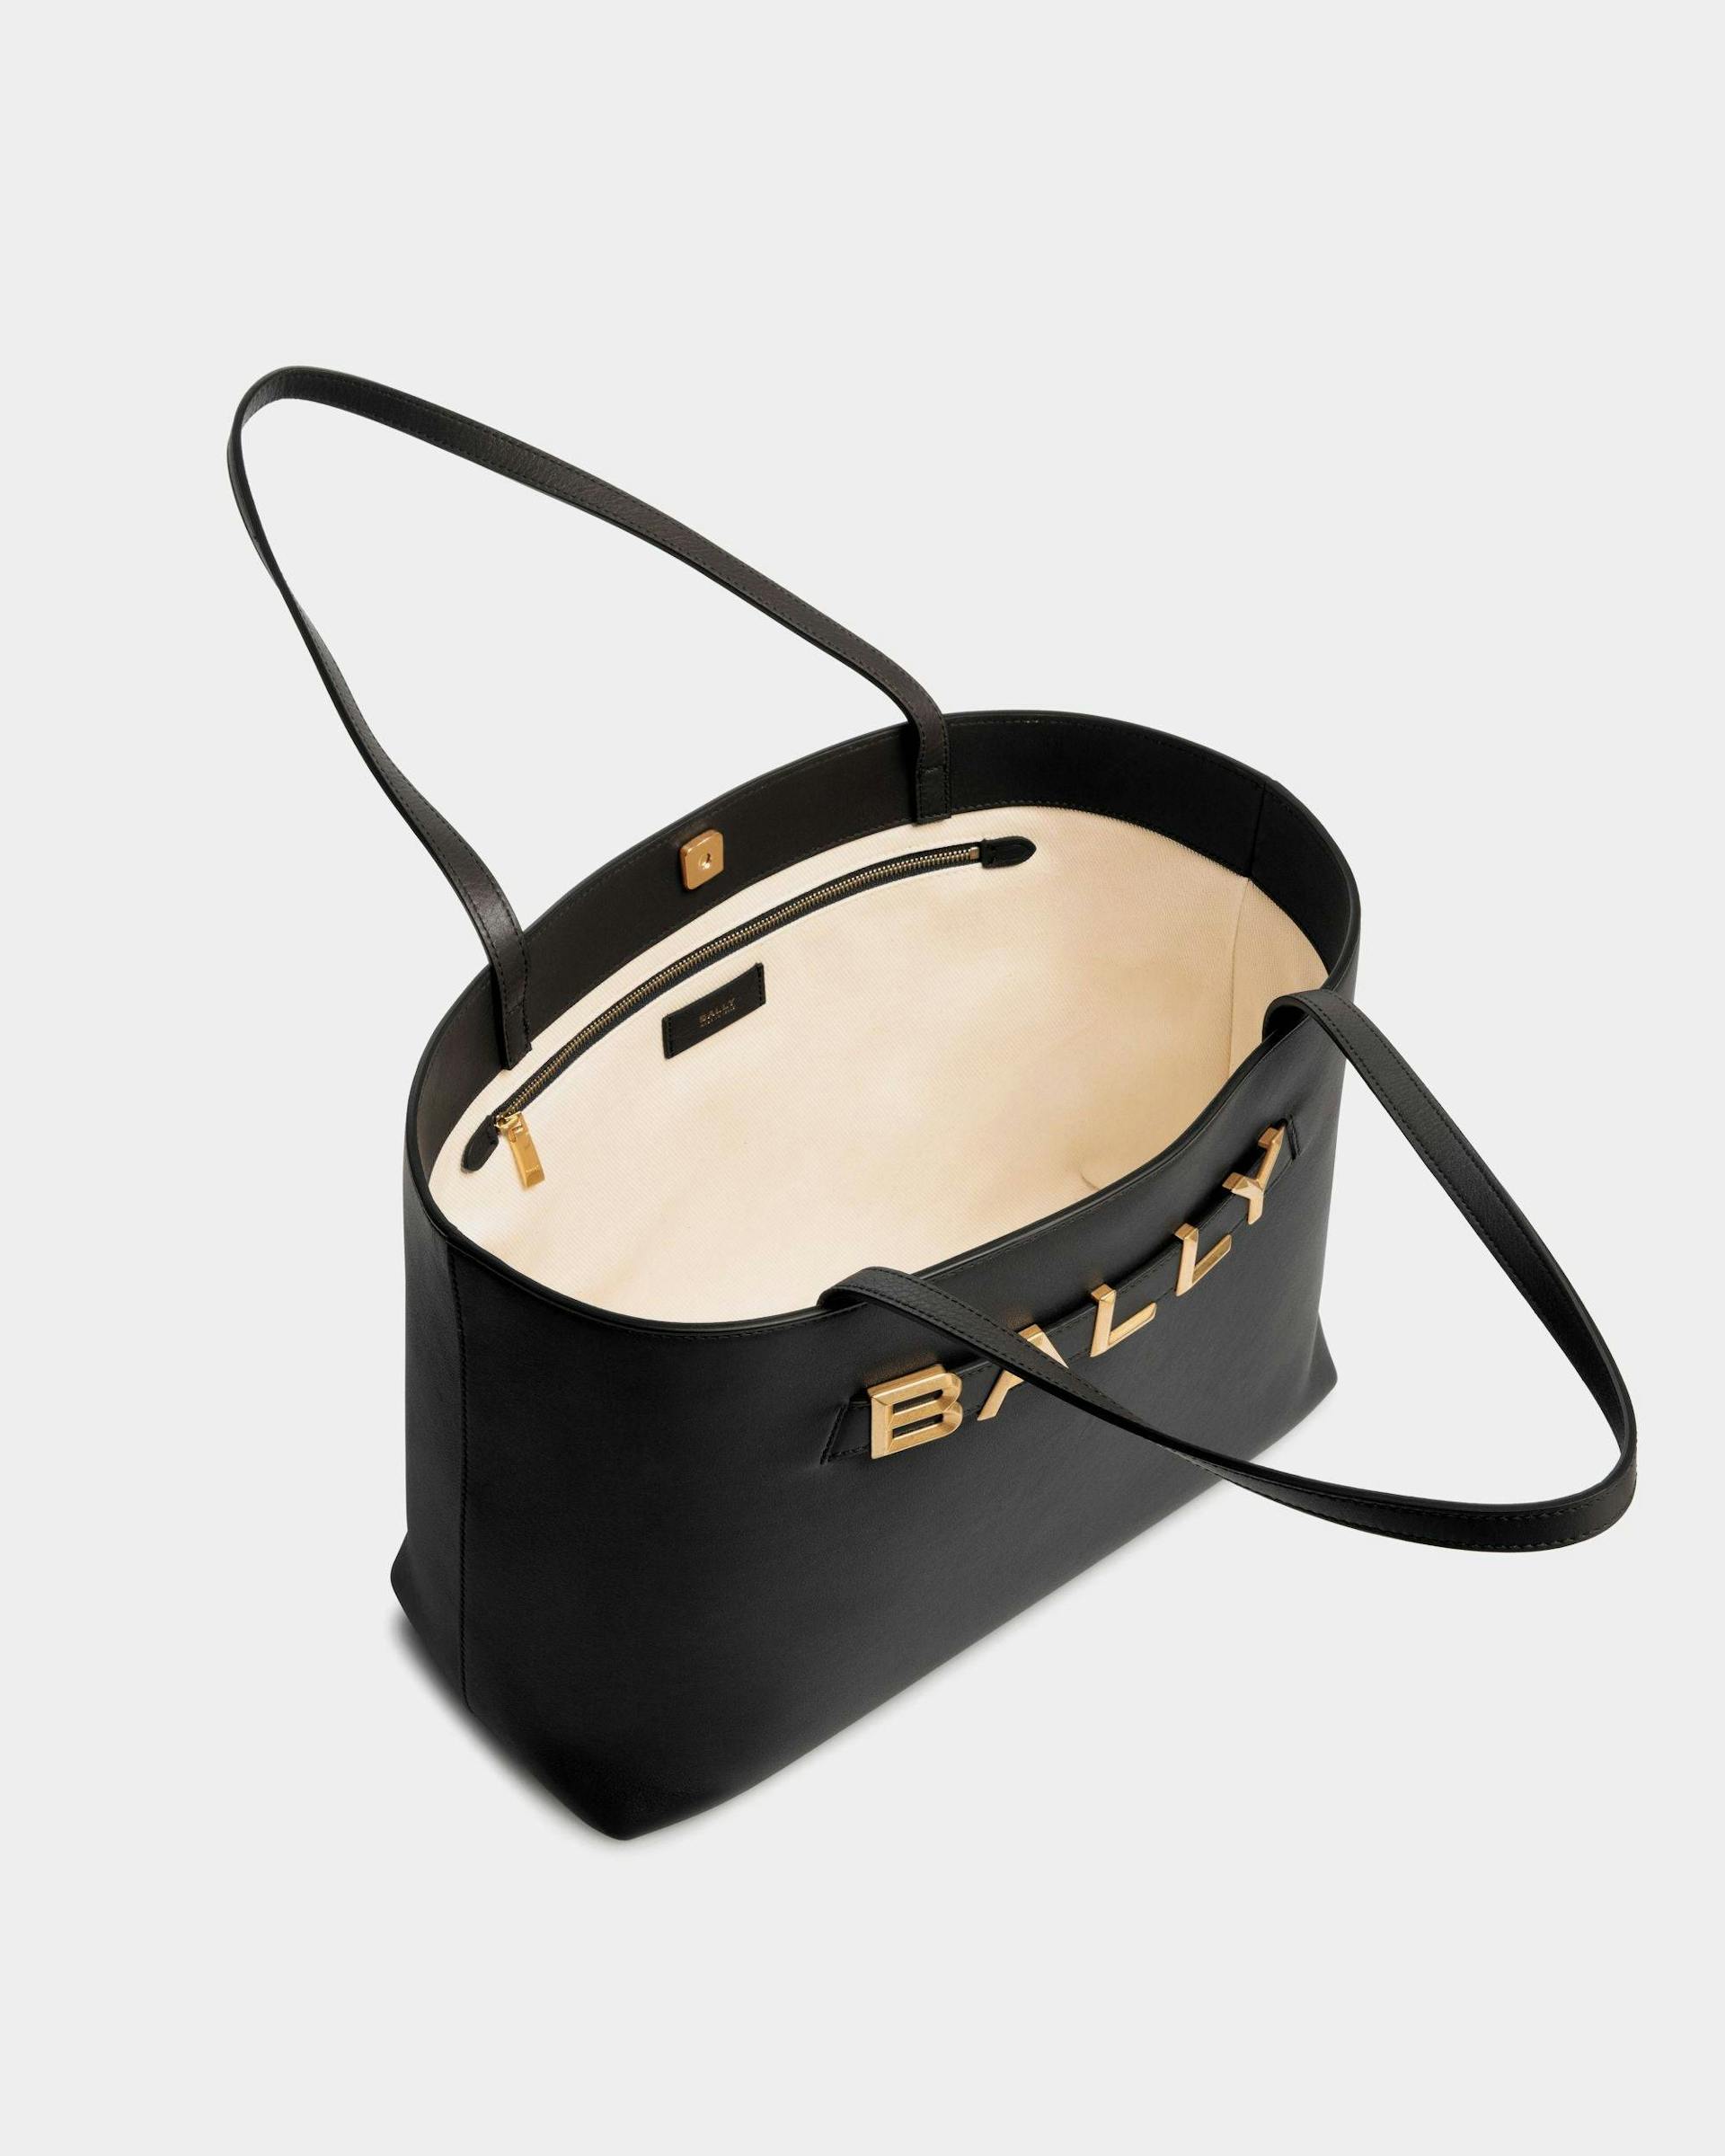 Women's Bally Spell Tote Bag in Black Leather | Bally | Still Life Open / Inside